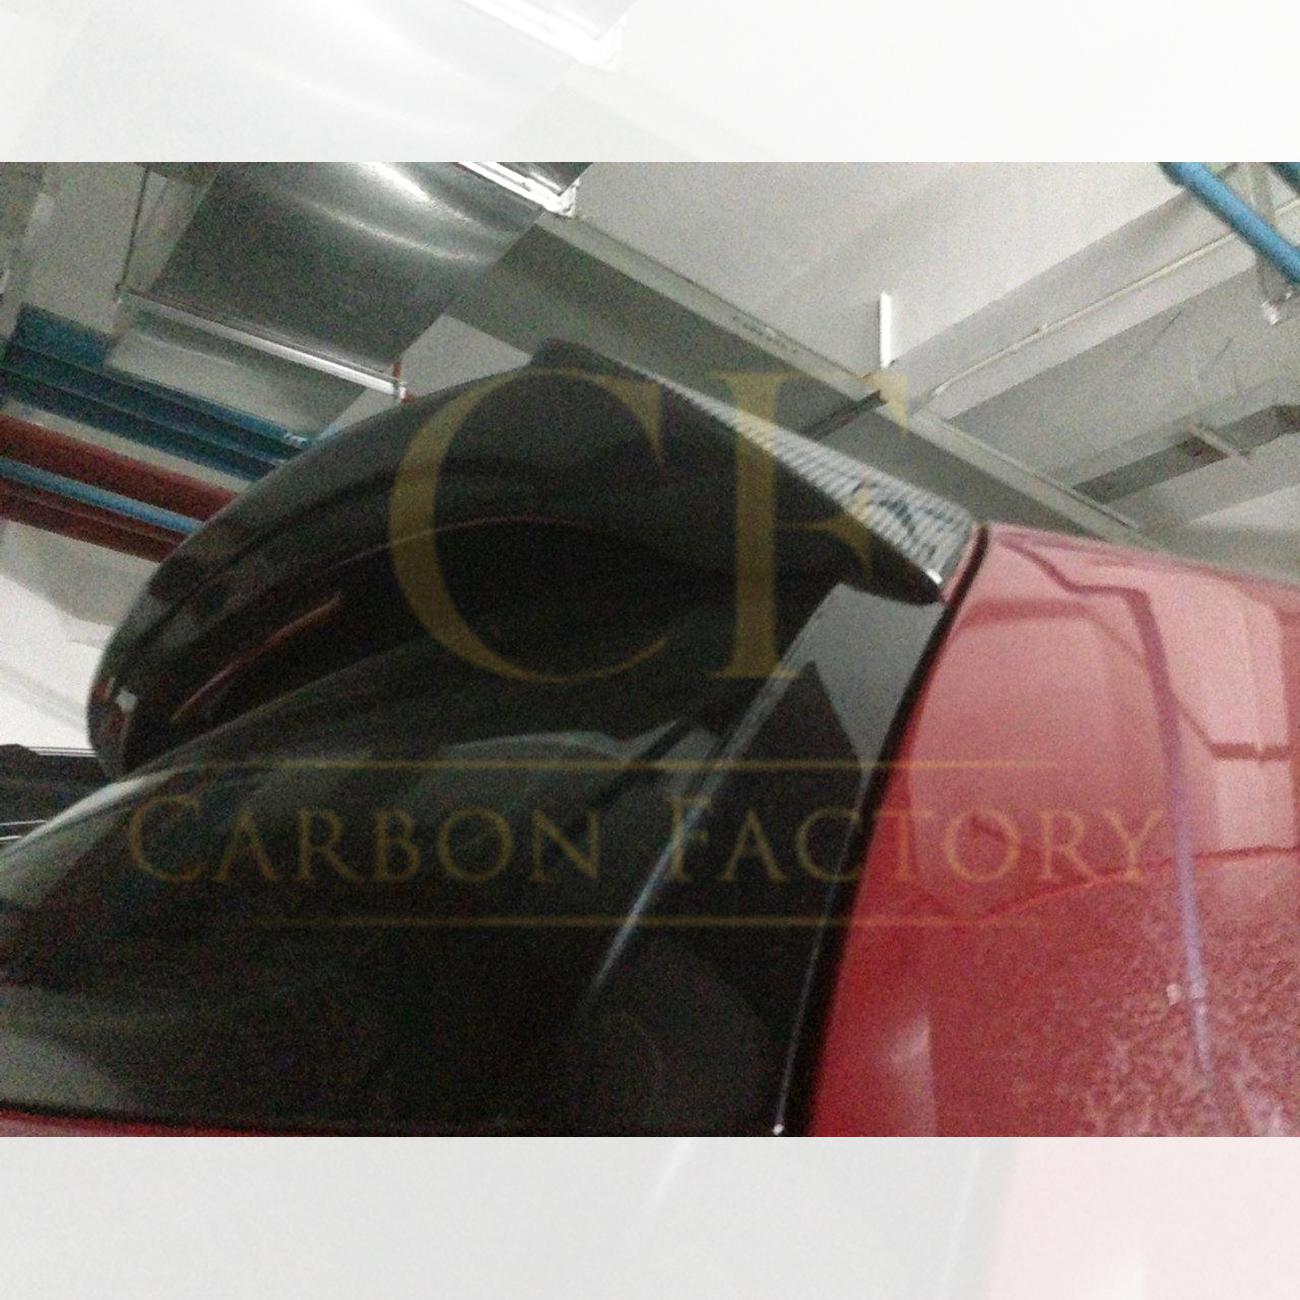 VW Scirocco OSIR Style Carbon Fibre Roof Spoiler 09-14-Carbon Factory